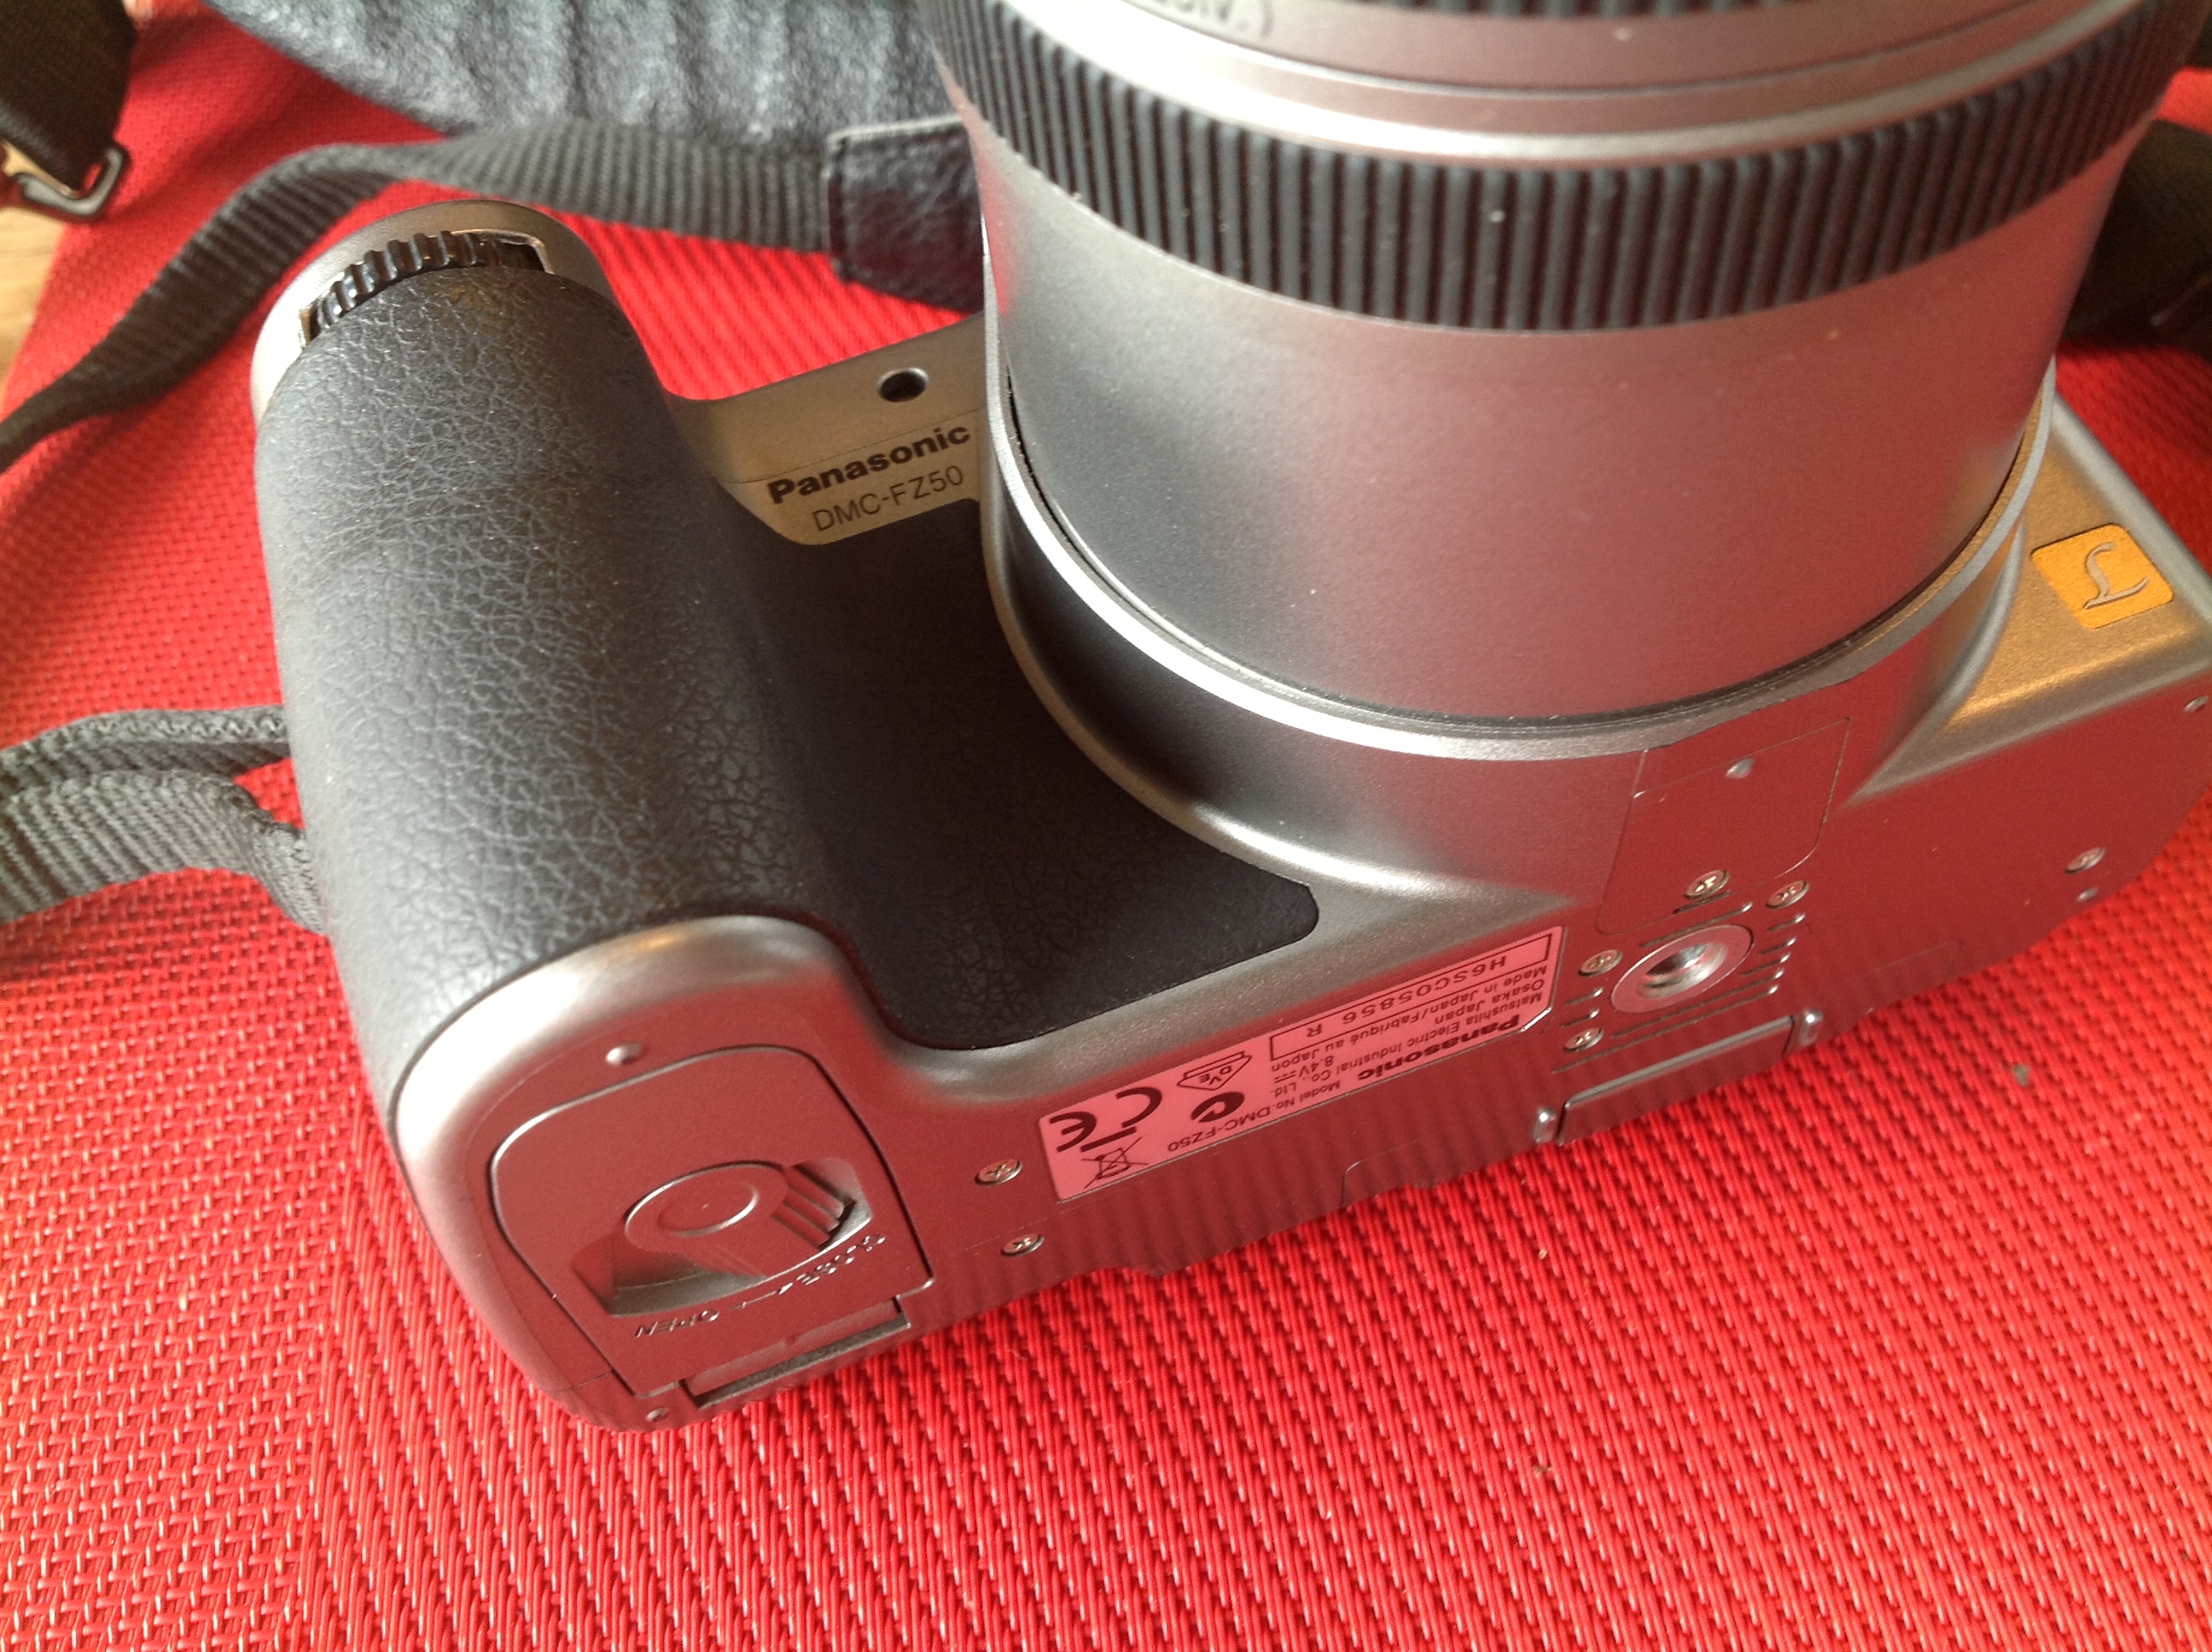 Digital-Kamera Panasonic Mod. DMC-FC50